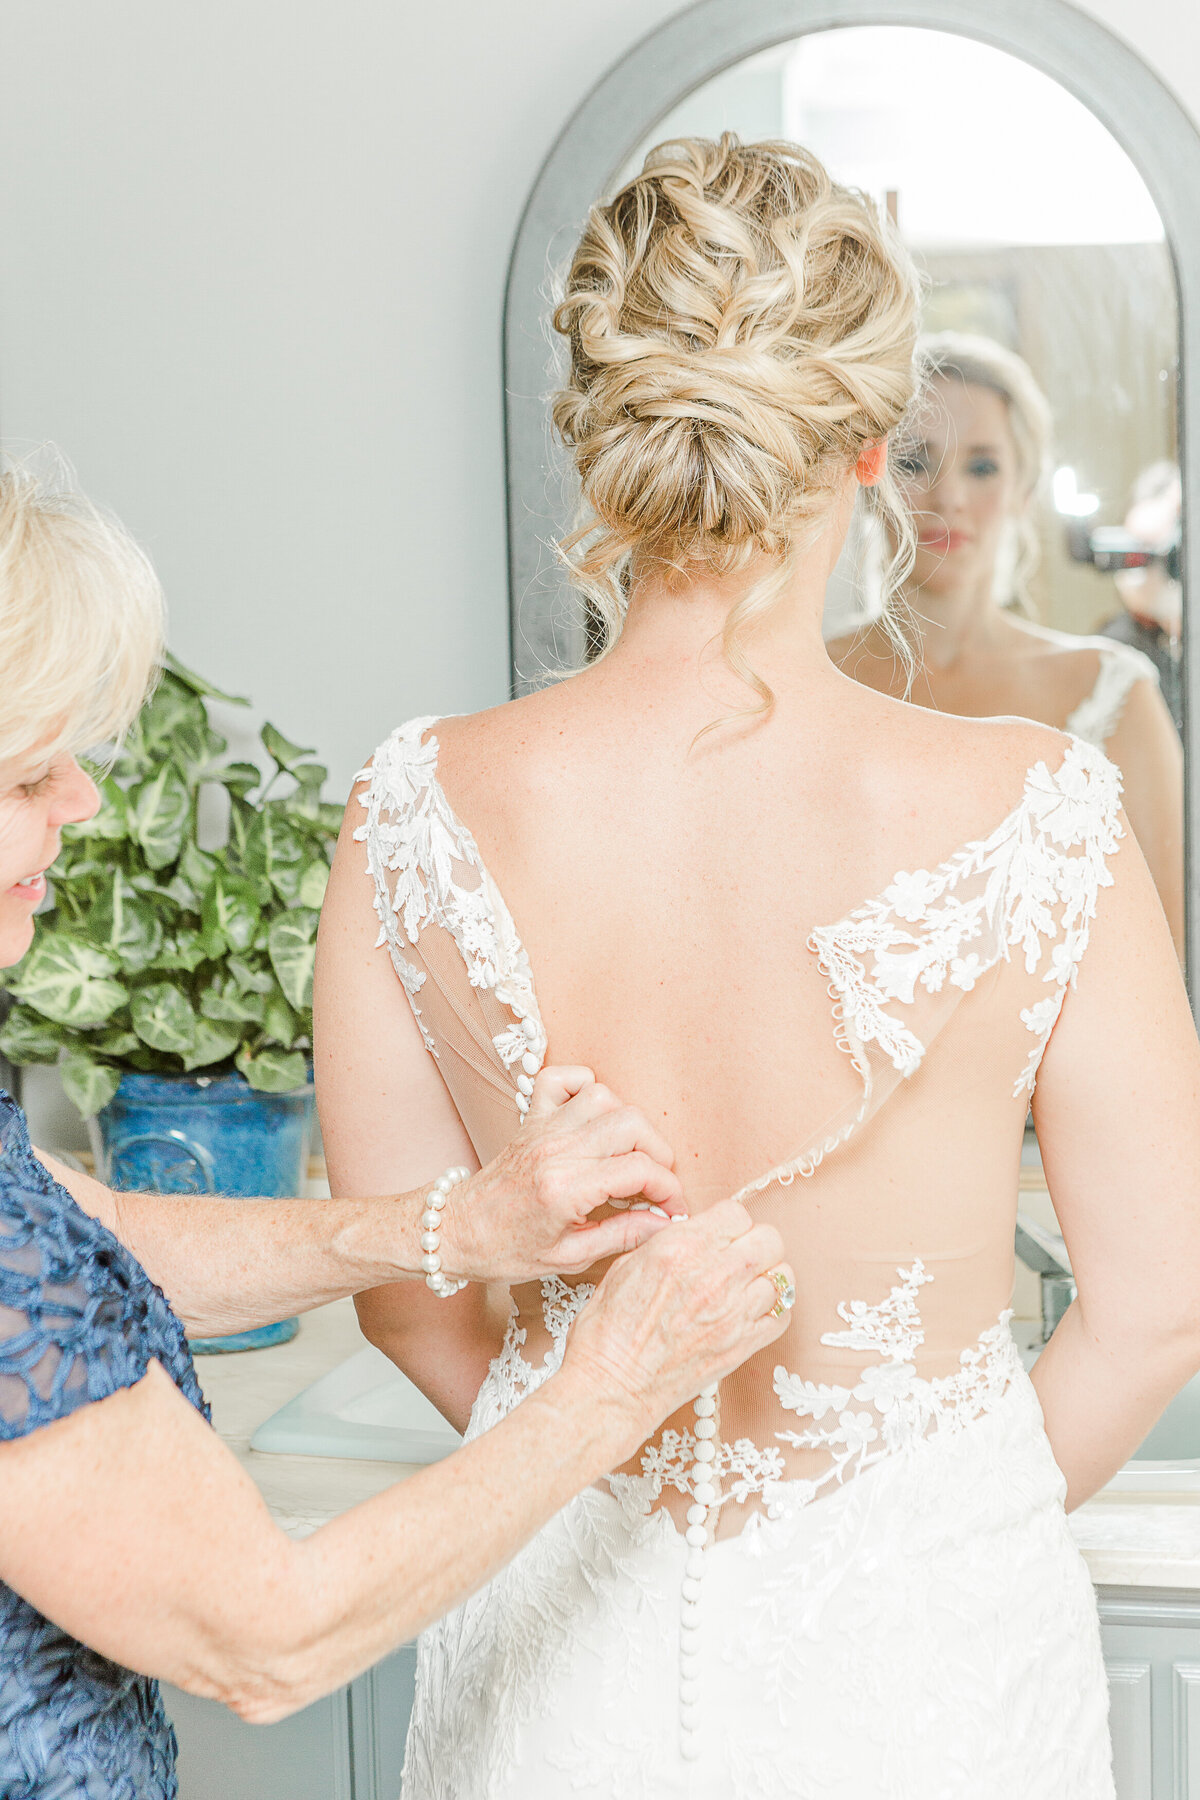 Mother of the bride helps her daughter fasten her wedding gown.